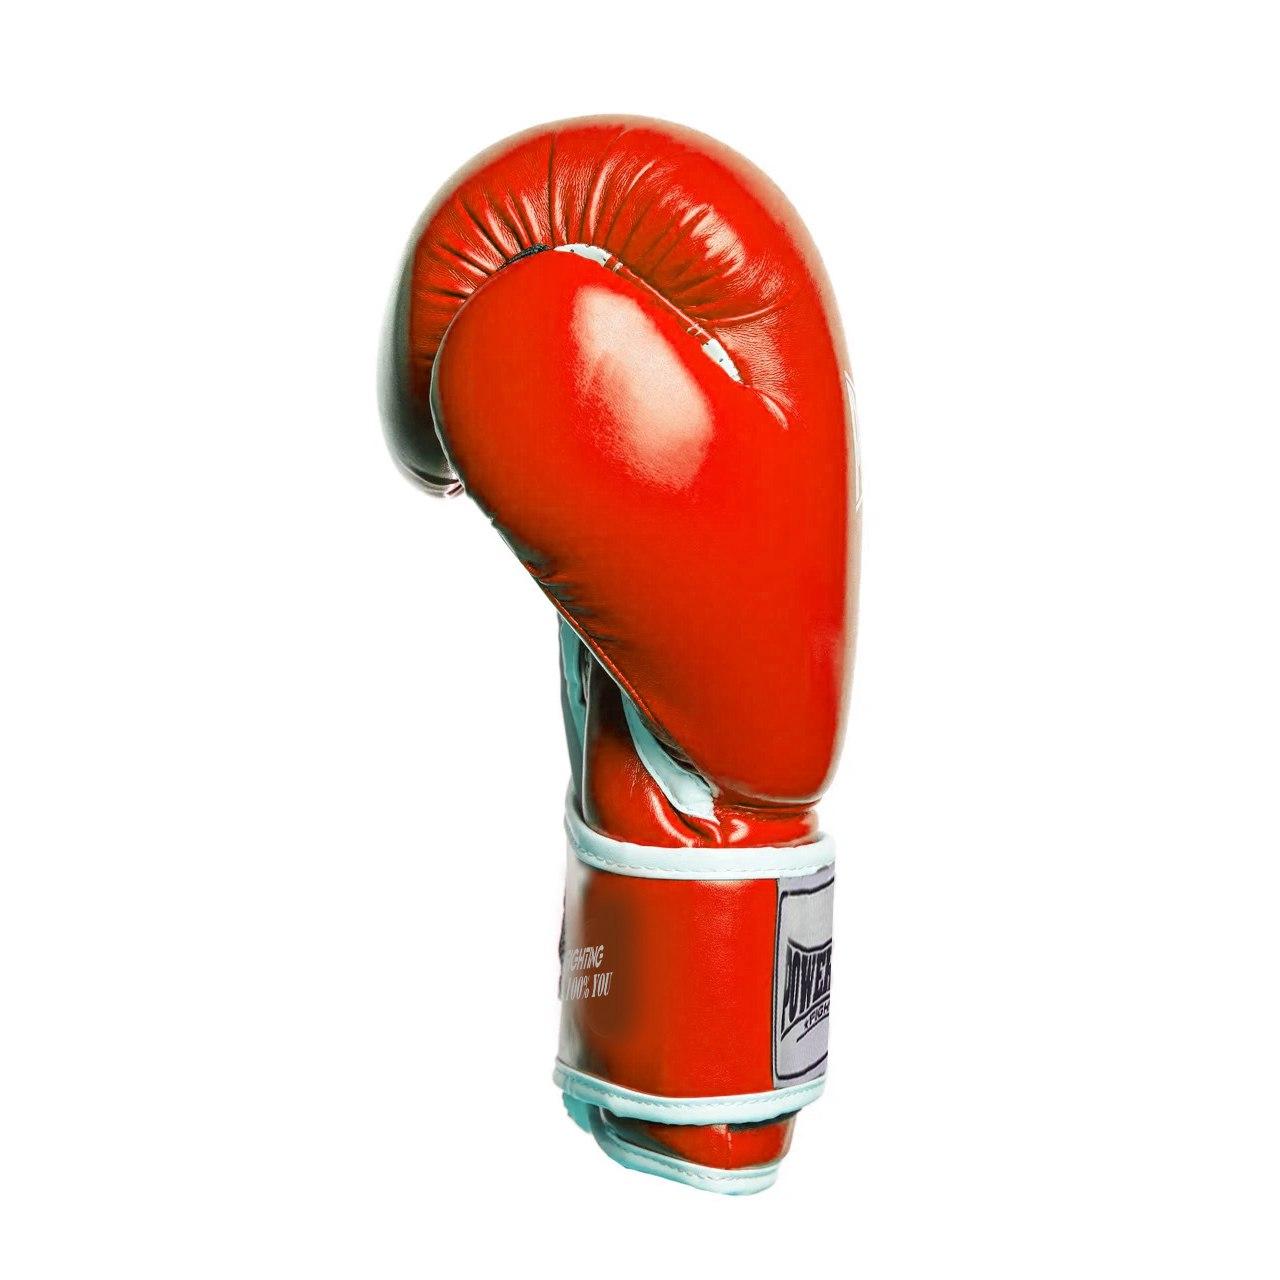 Боксерские перчатки PowerPlay 3019 красные 8 унций